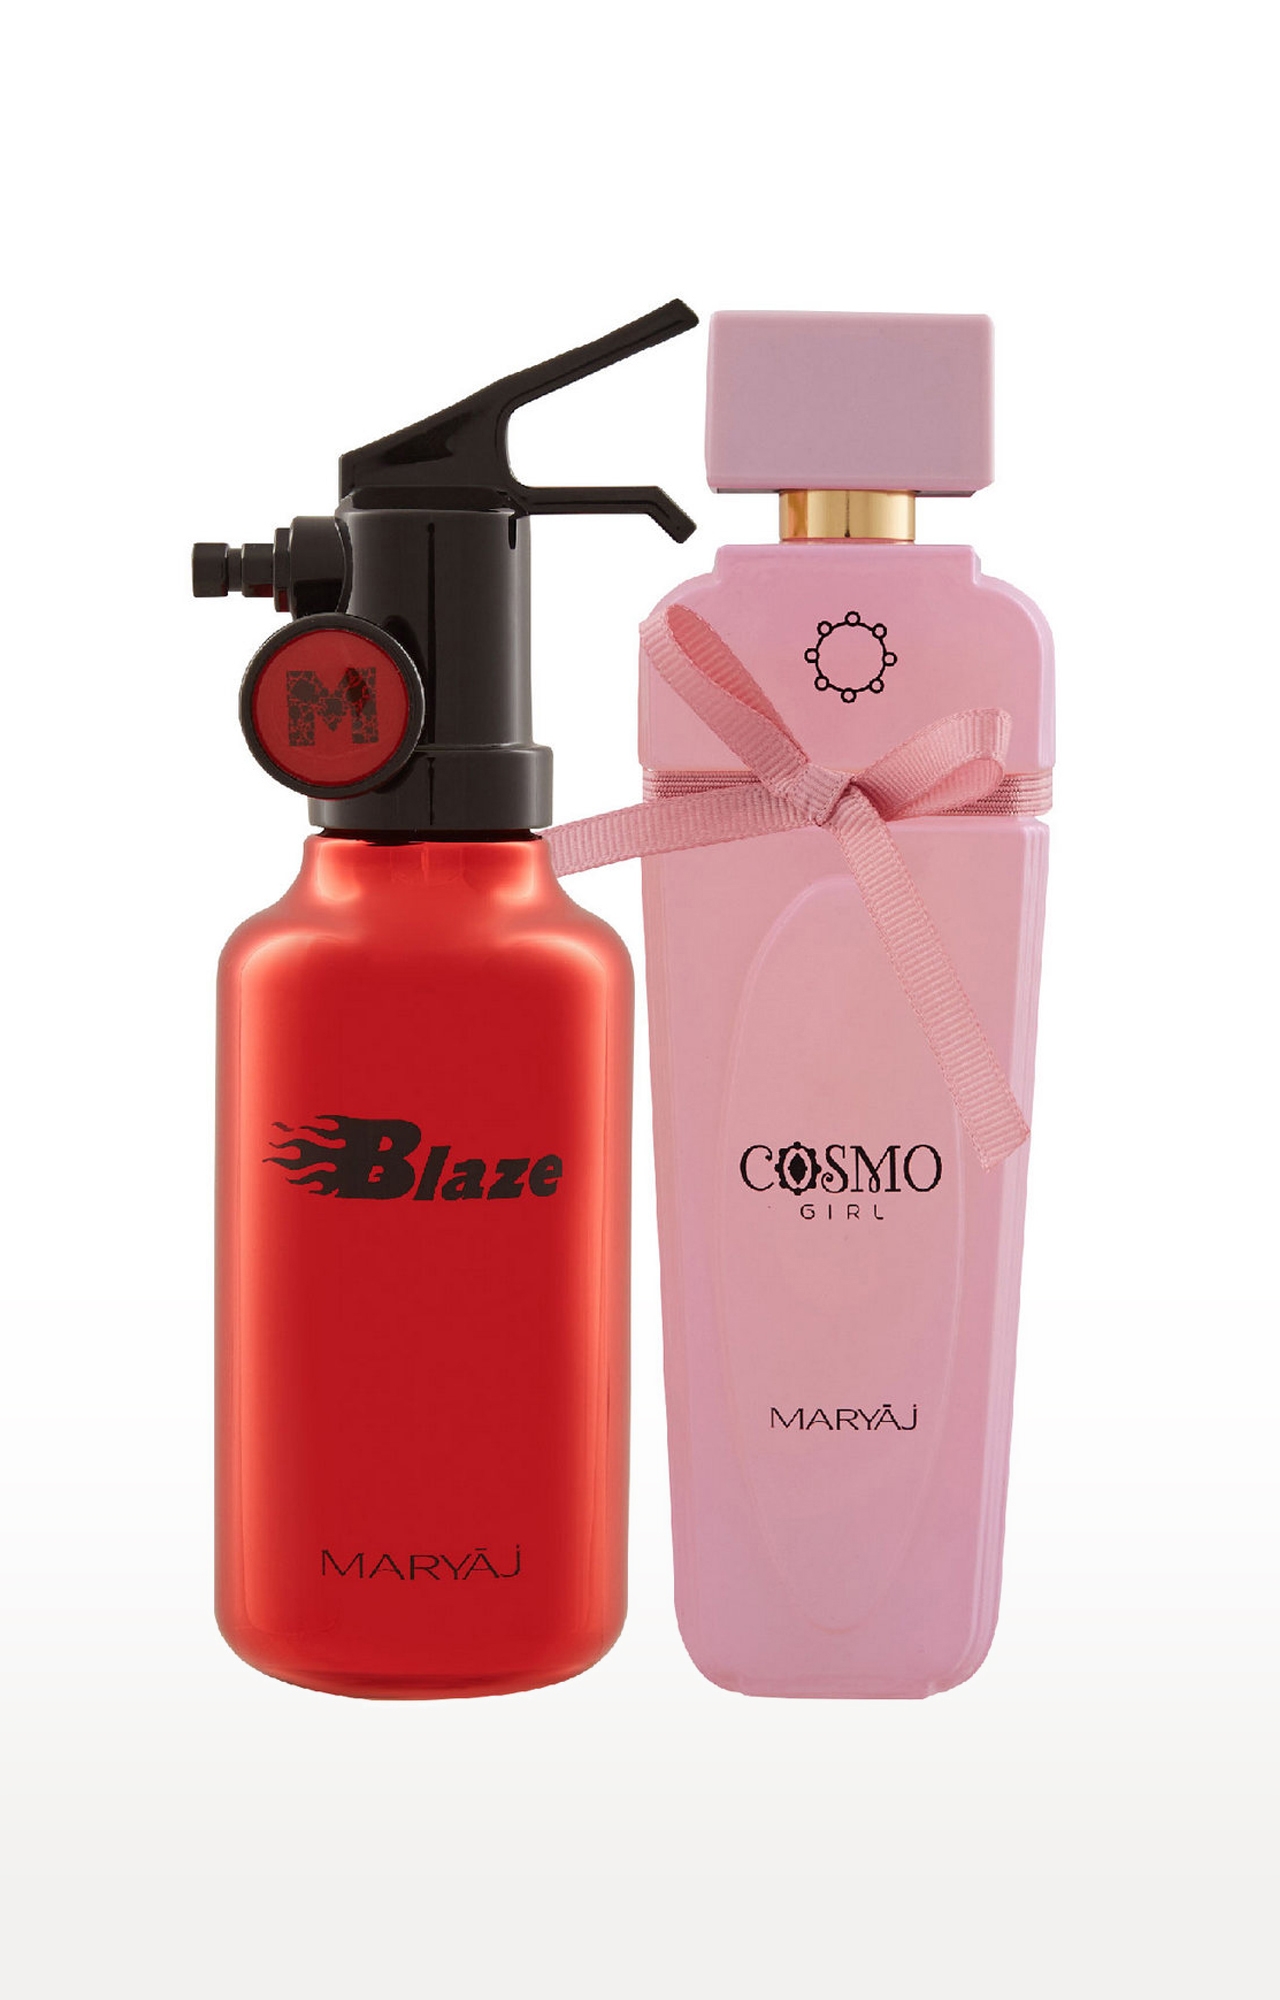 Maryaj Blaze Eau De Parfum Perfume 100ml for Men and Maryaj Cosmo Girl Eau De Parfum Perfume 100ml for WoMen